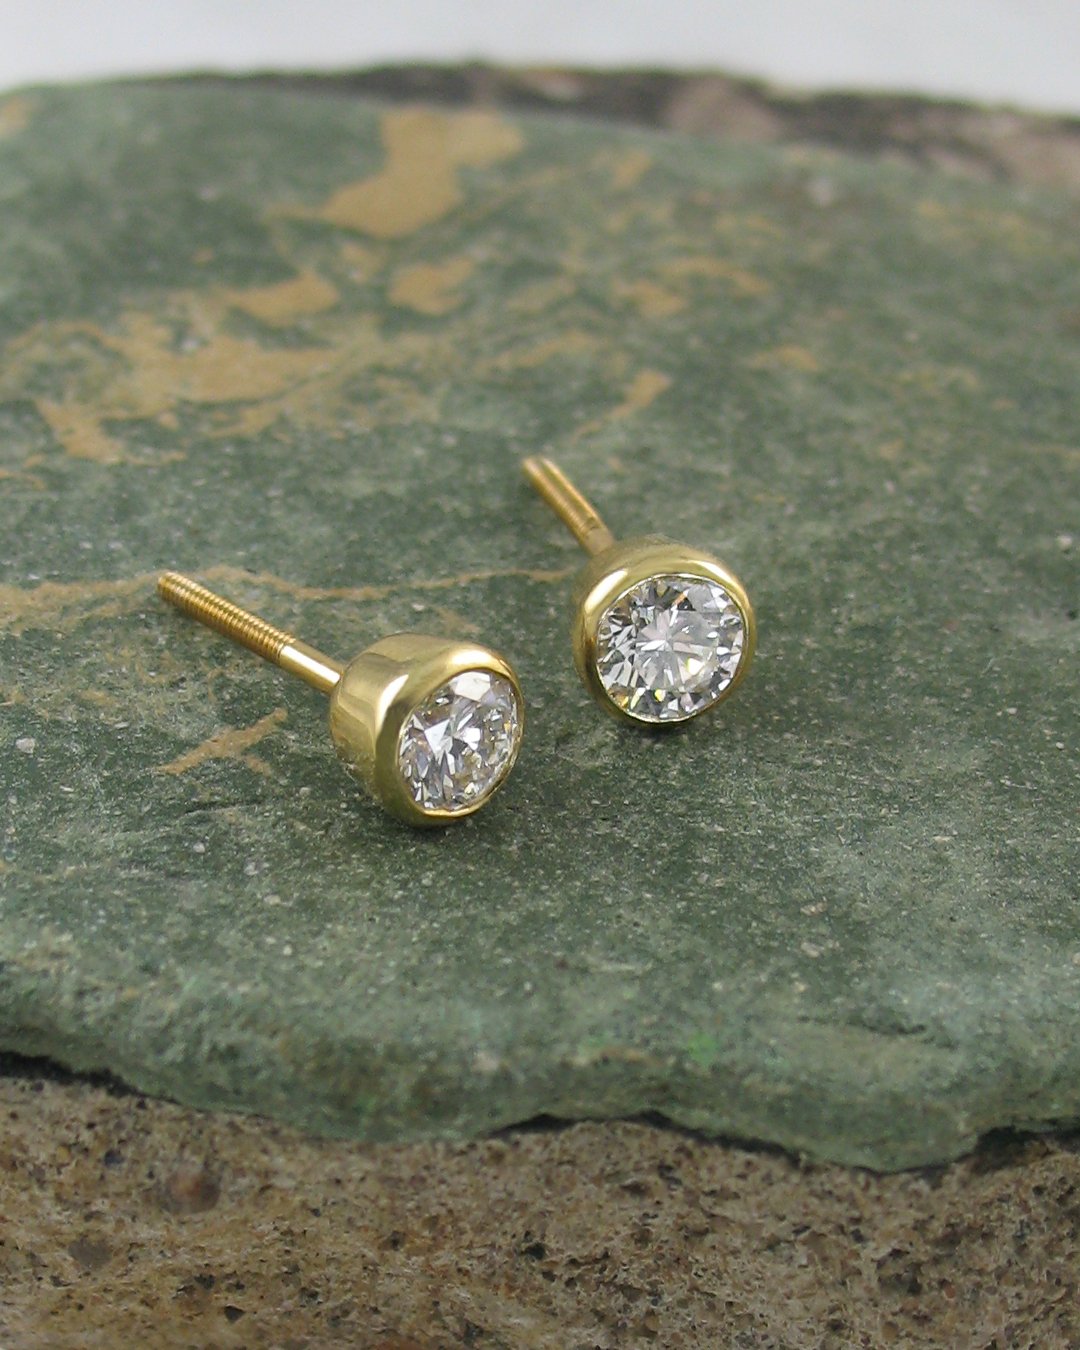 A pair of classic diamond stud earrings